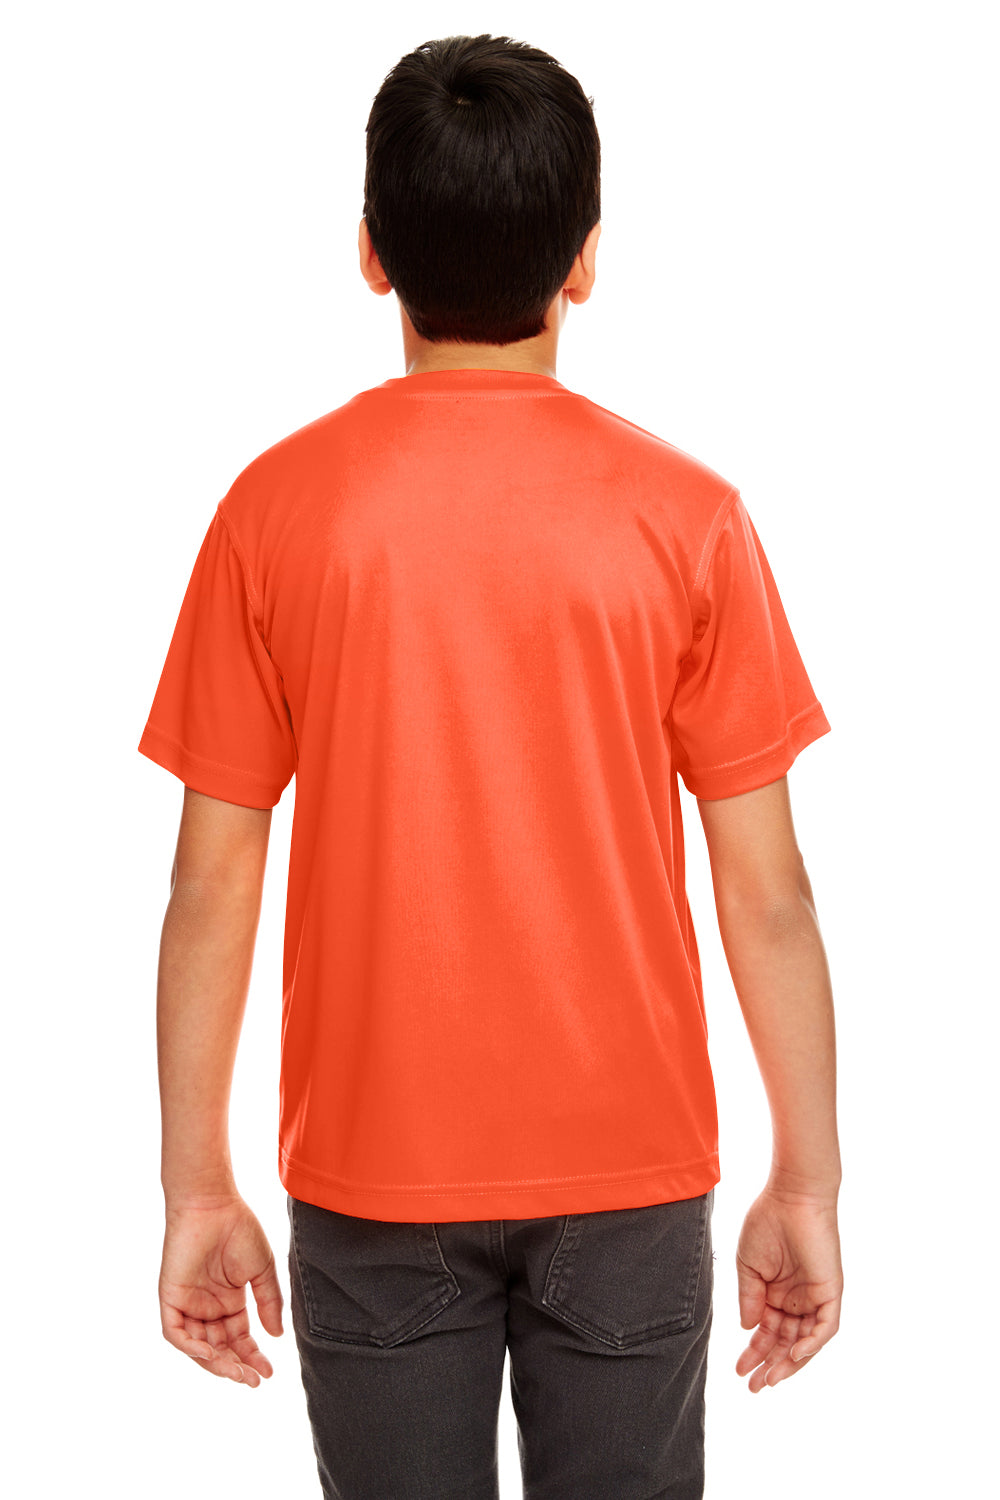 UltraClub 8420Y Youth Cool & Dry Performance Moisture Wicking Short Sleeve Crewneck T-Shirt Orange Back